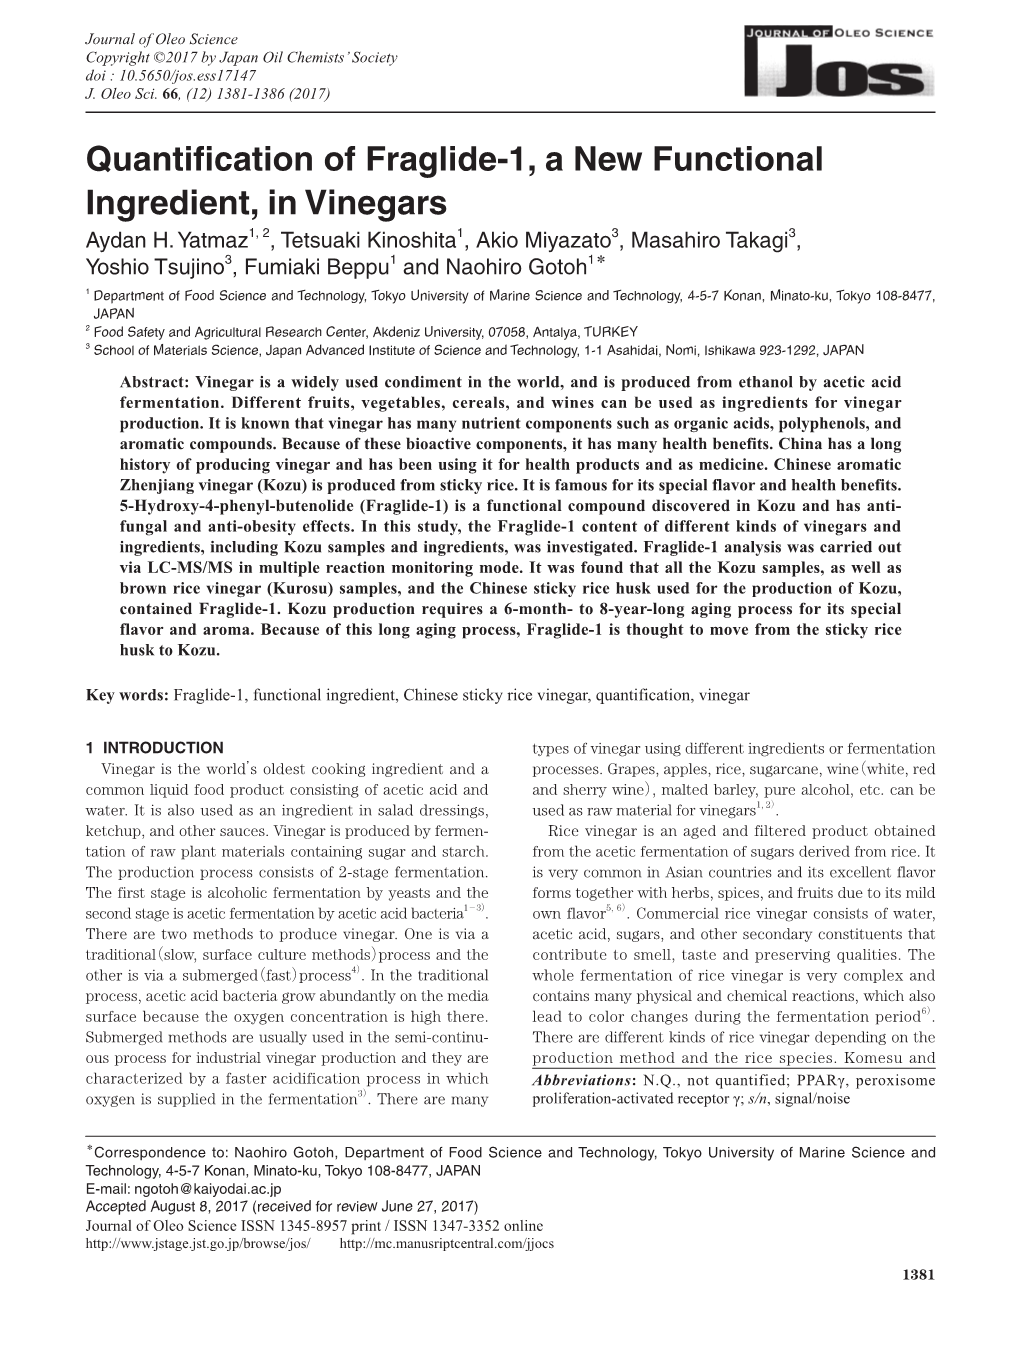 Quantification of Fraglide-1, a New Functional Ingredient, in Vinegars Aydan H